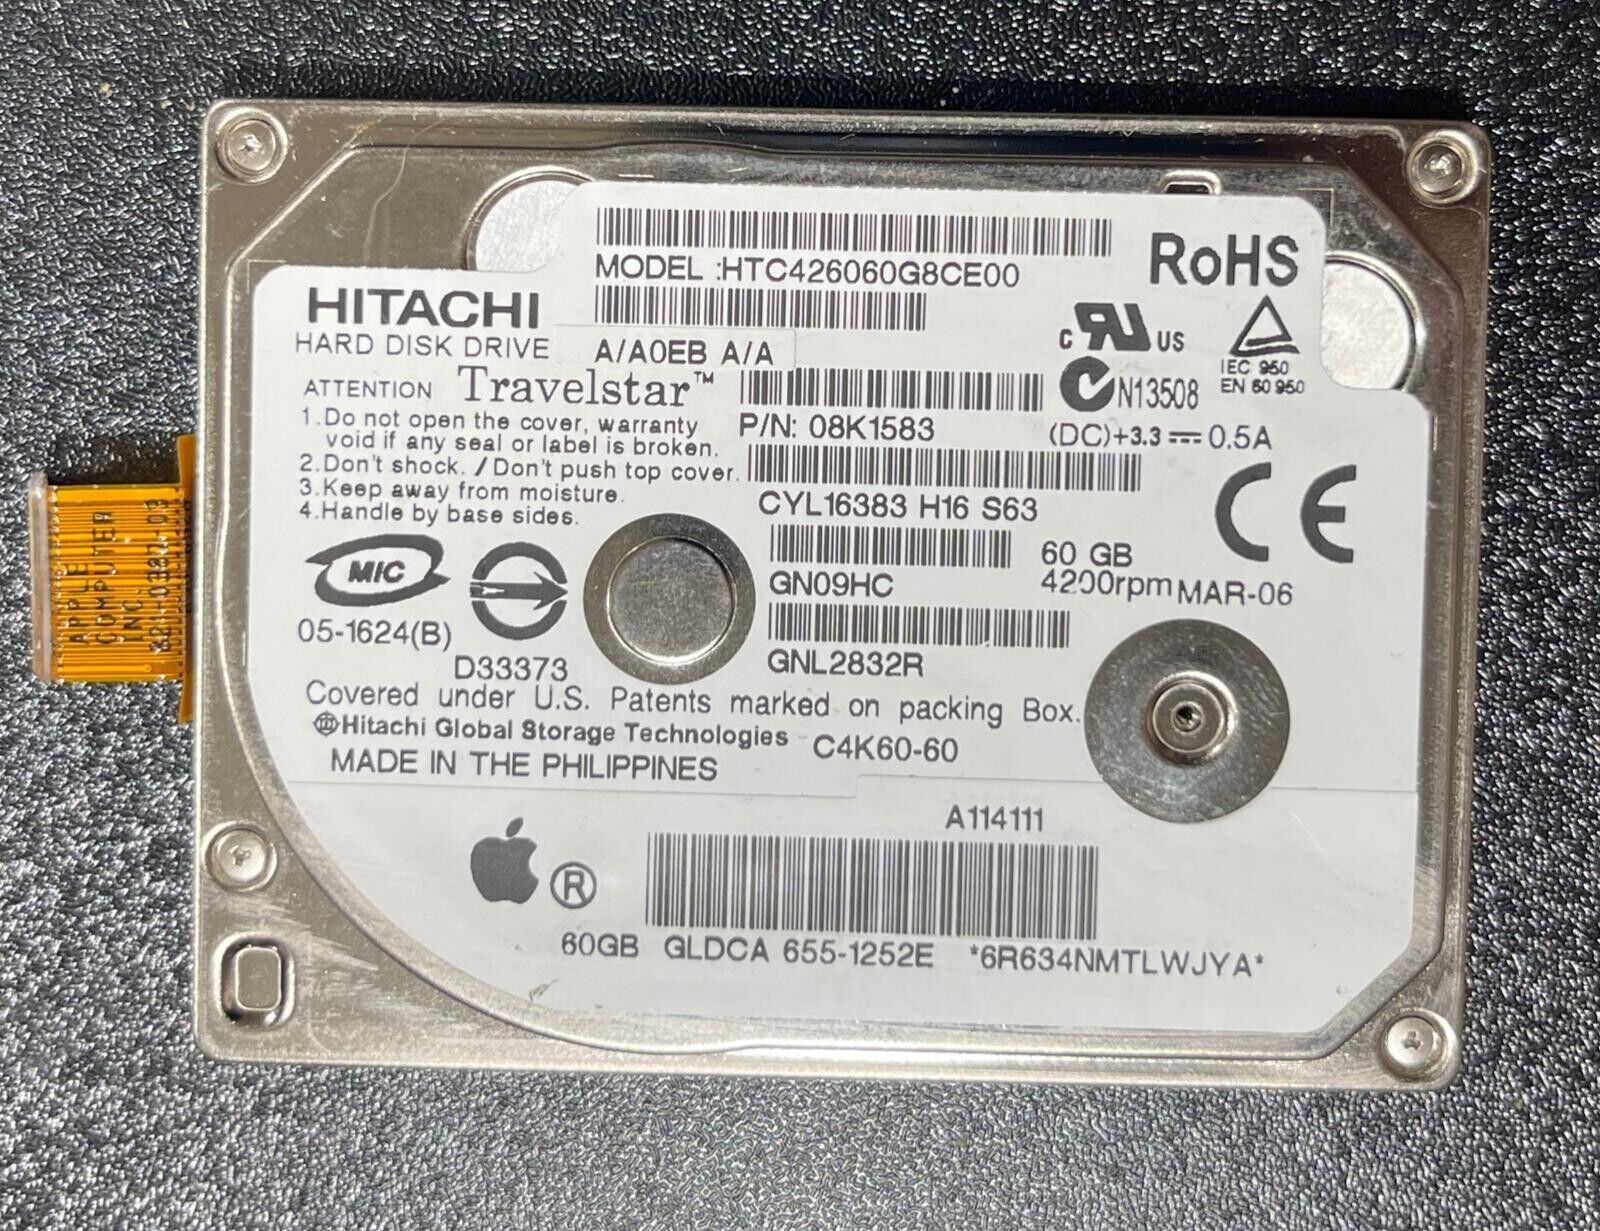 HTC426060G8CE00 Hitachi 60GB 1.8